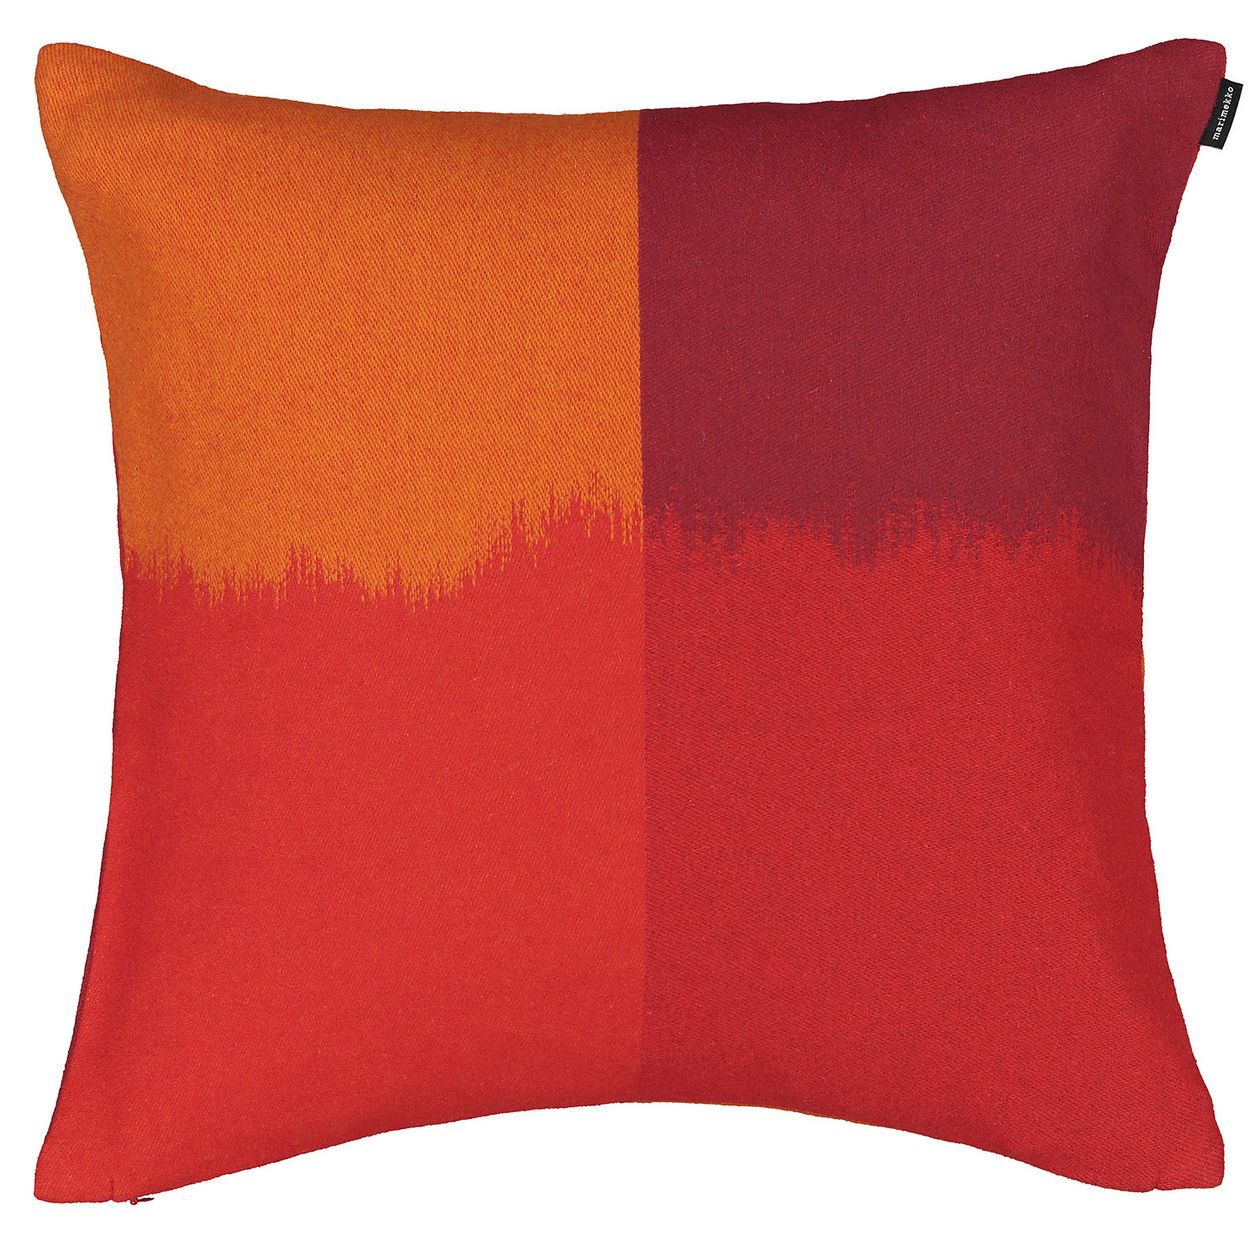 Marimekko Ostjakki cushion cover 50 x 50 cm, red - orange - brown